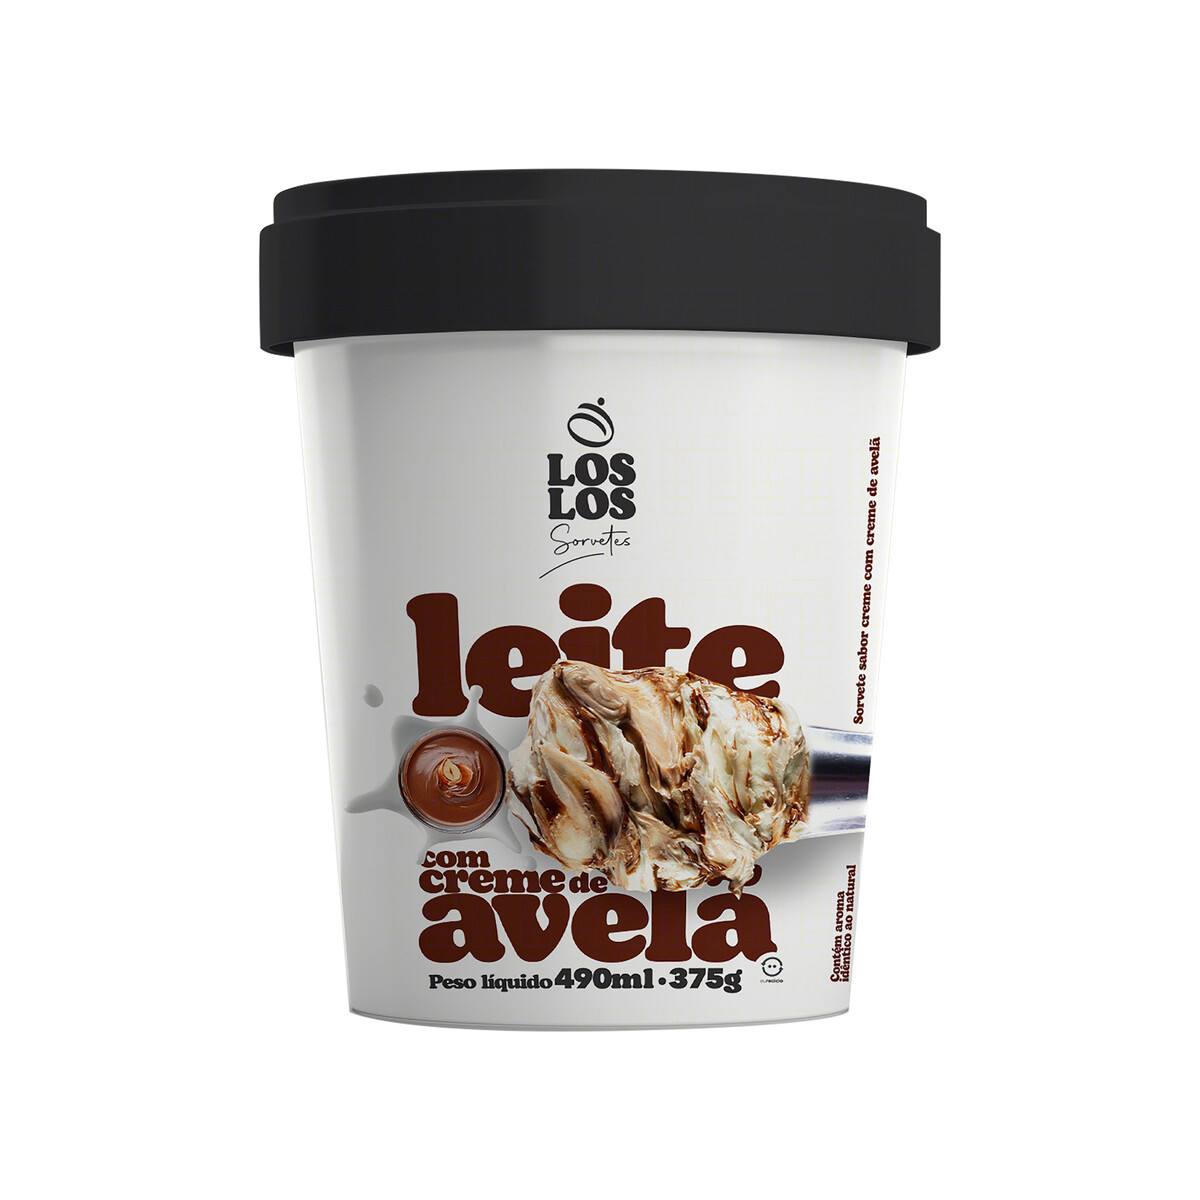 Mi helaod favorito 🍧 #aloha #cremhelado #lecherita #helado #vlog